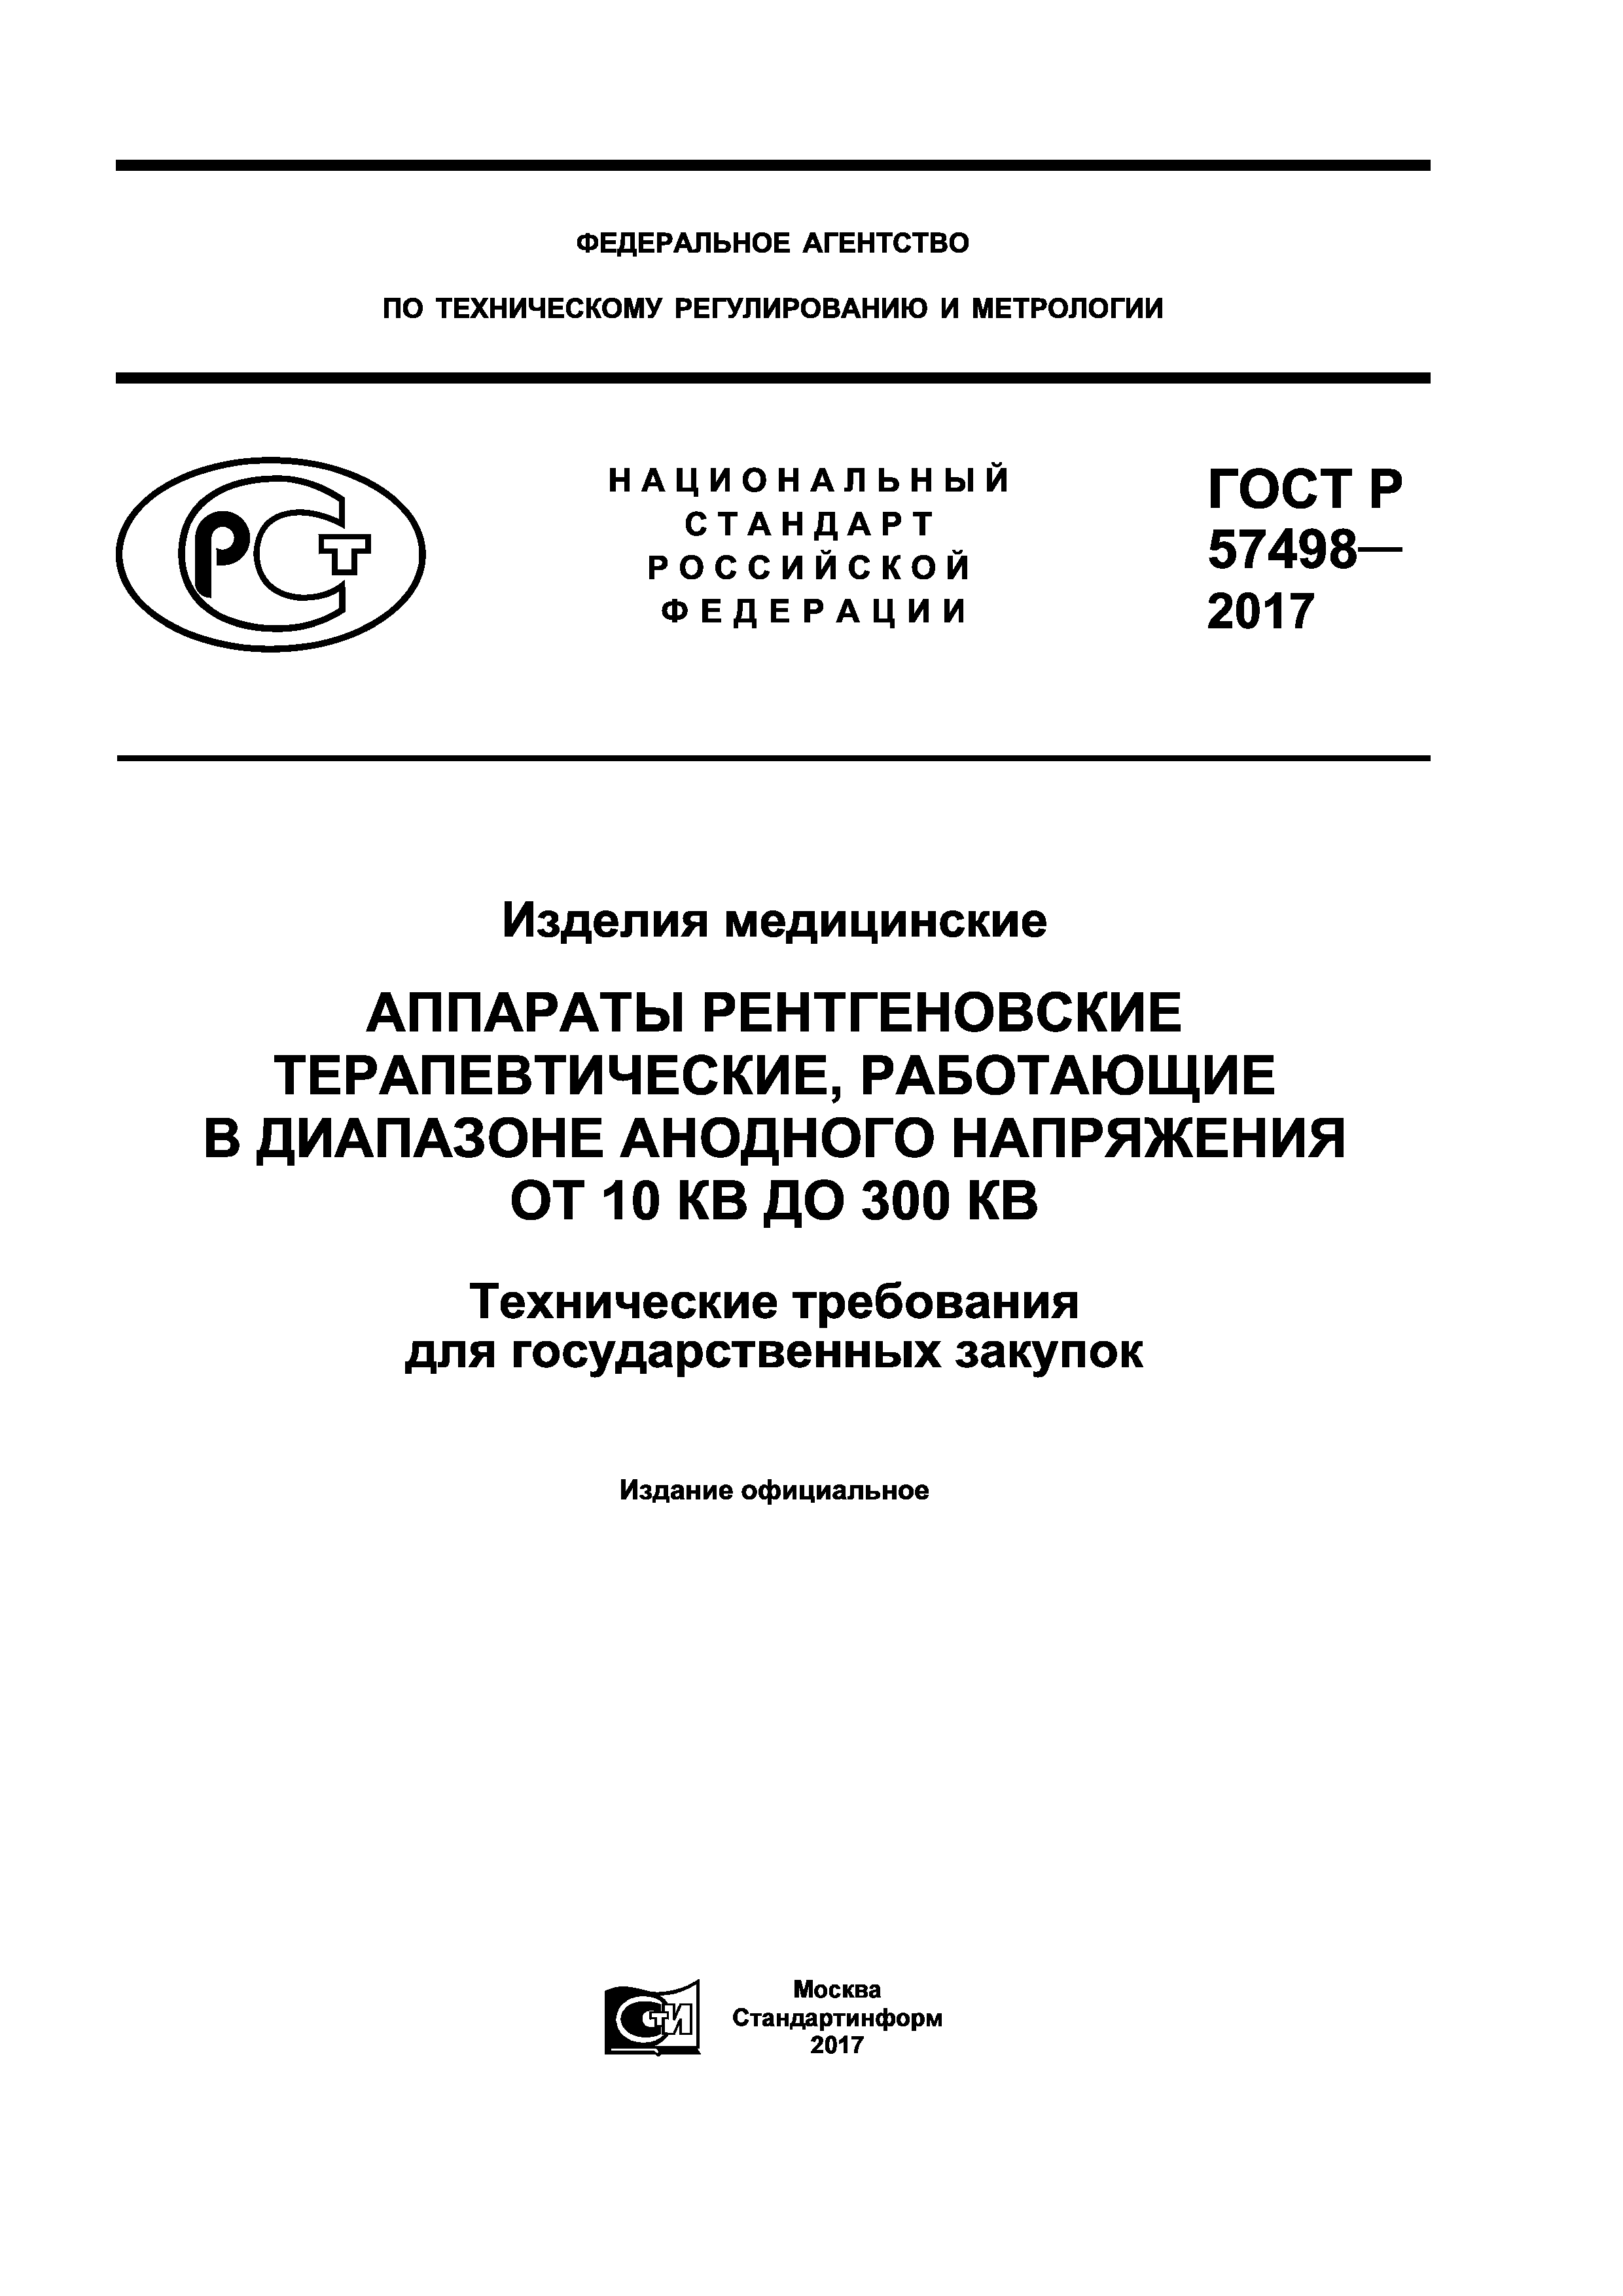 ГОСТ Р 57498-2017